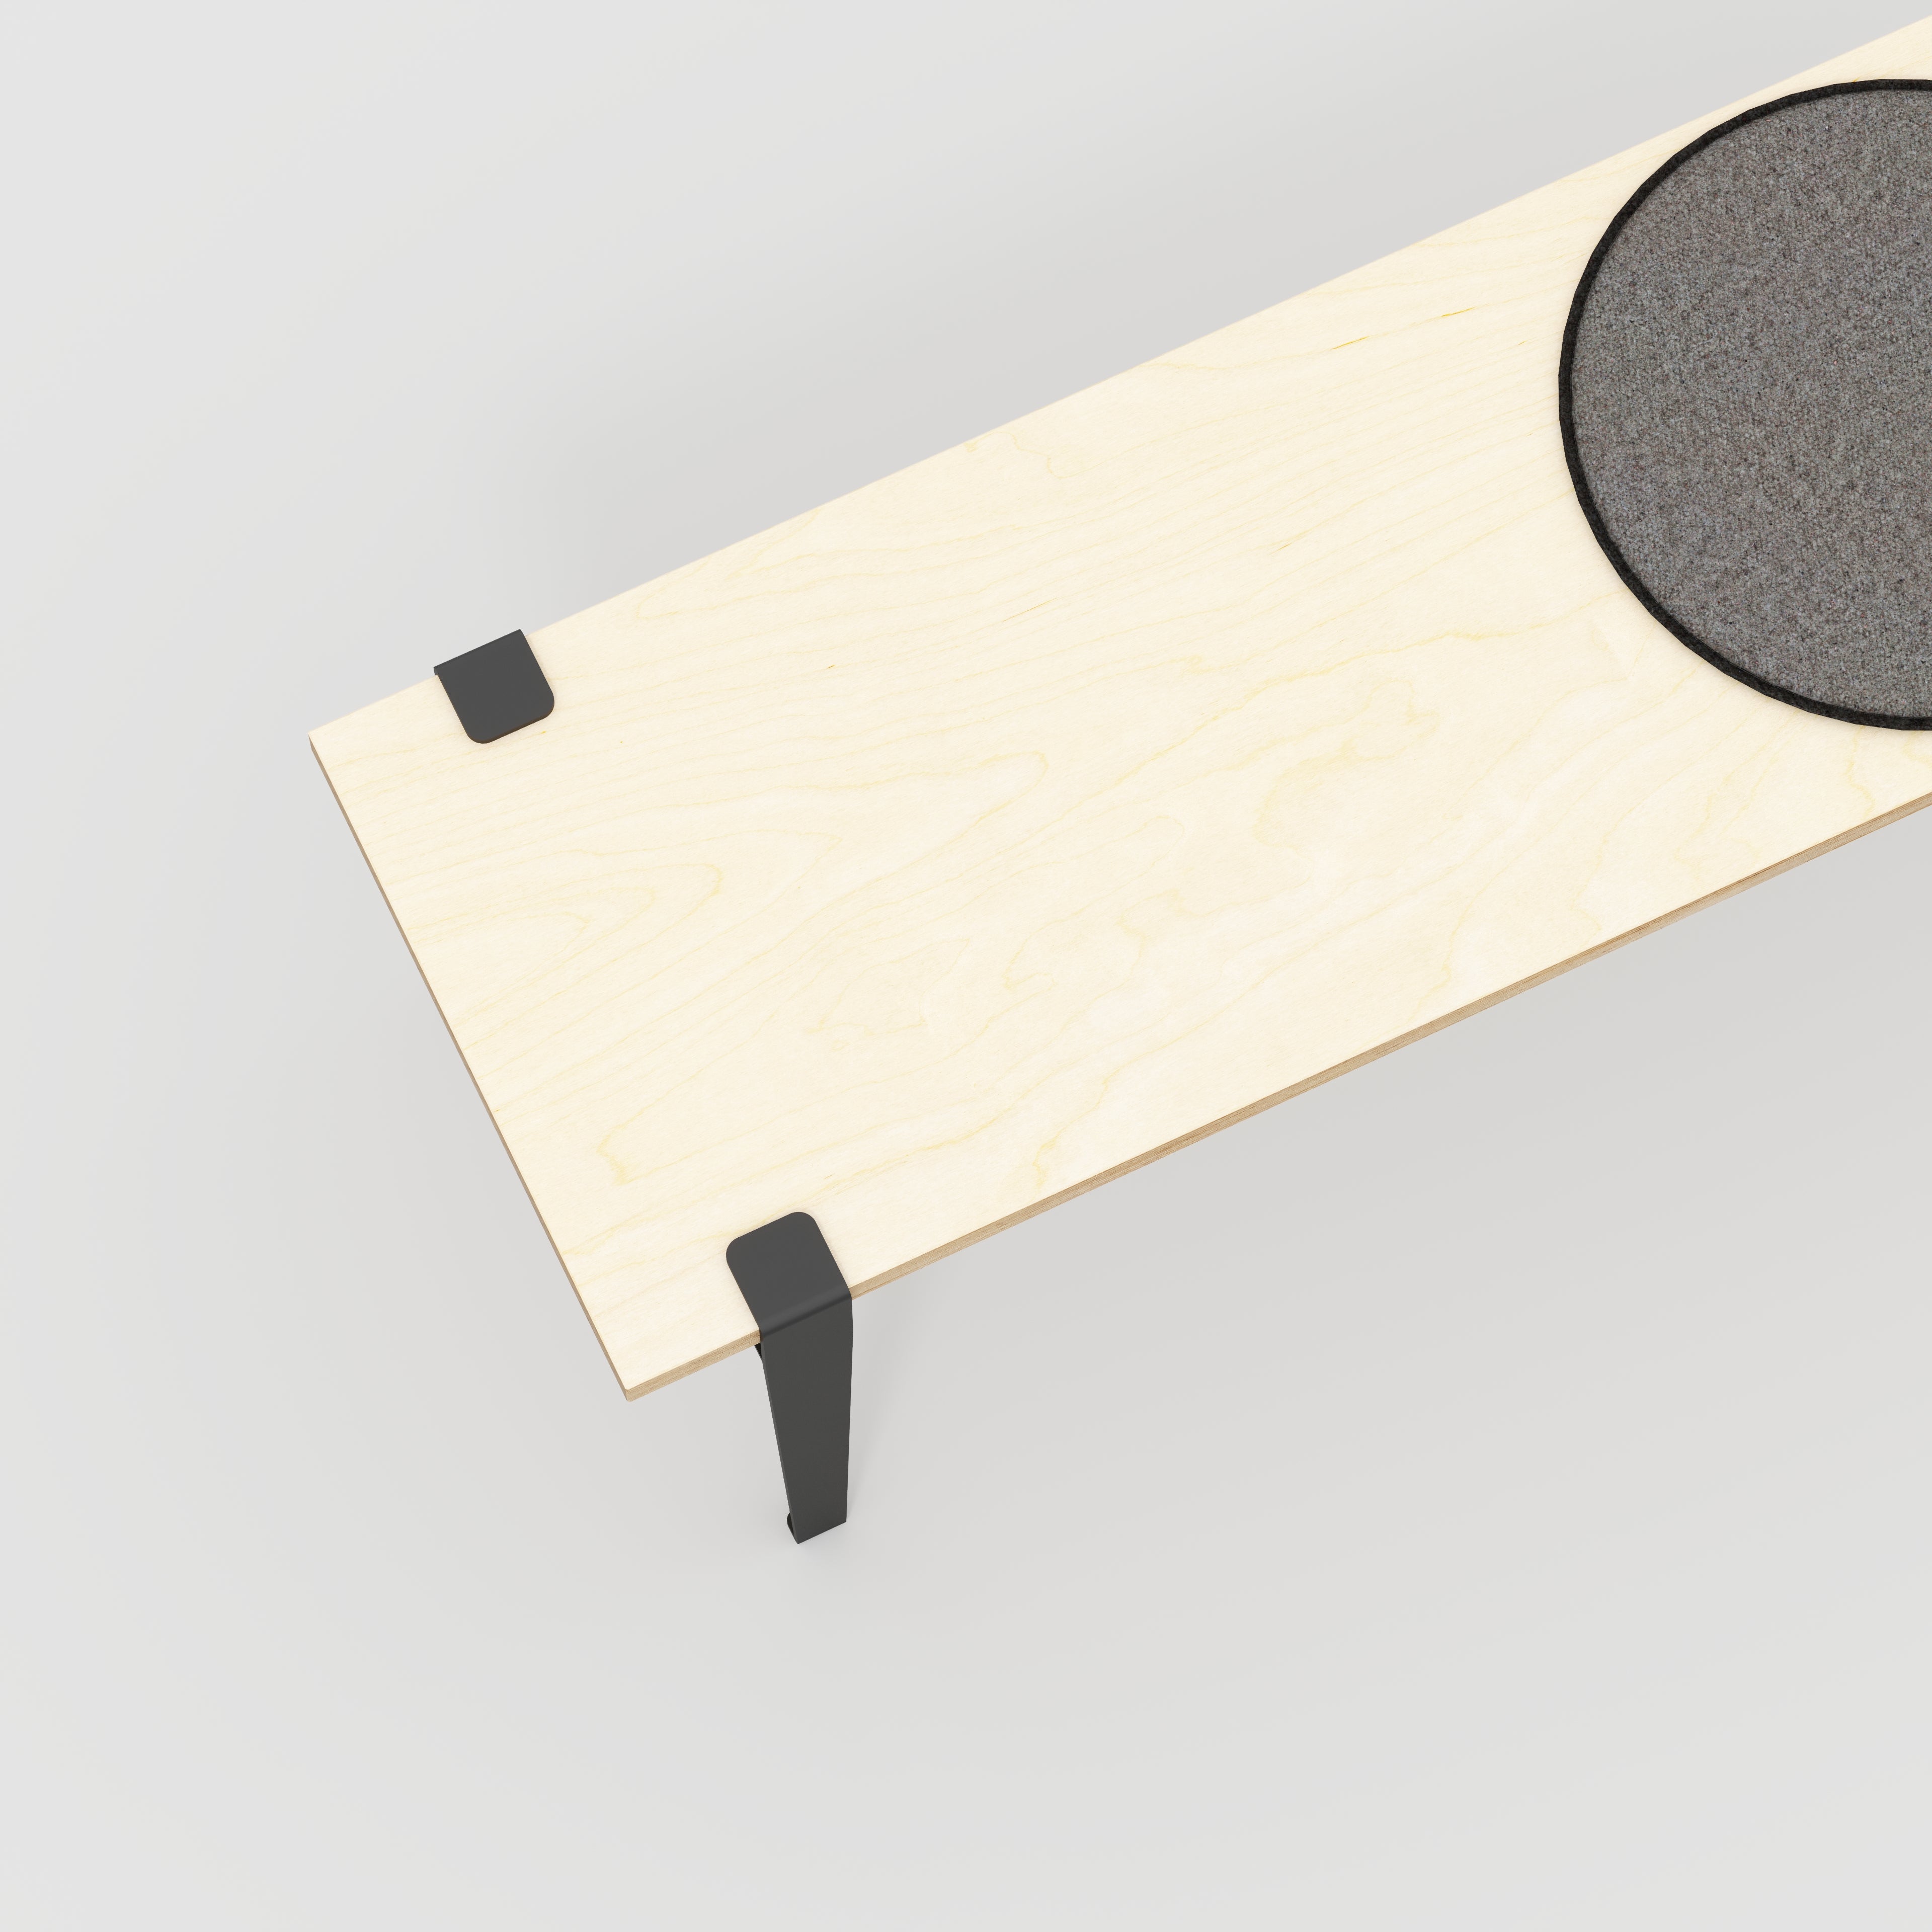 Bench Seat with Black Tiptoe Legs - Plywood Birch - 1200(w) x 400(d) x 450(h)